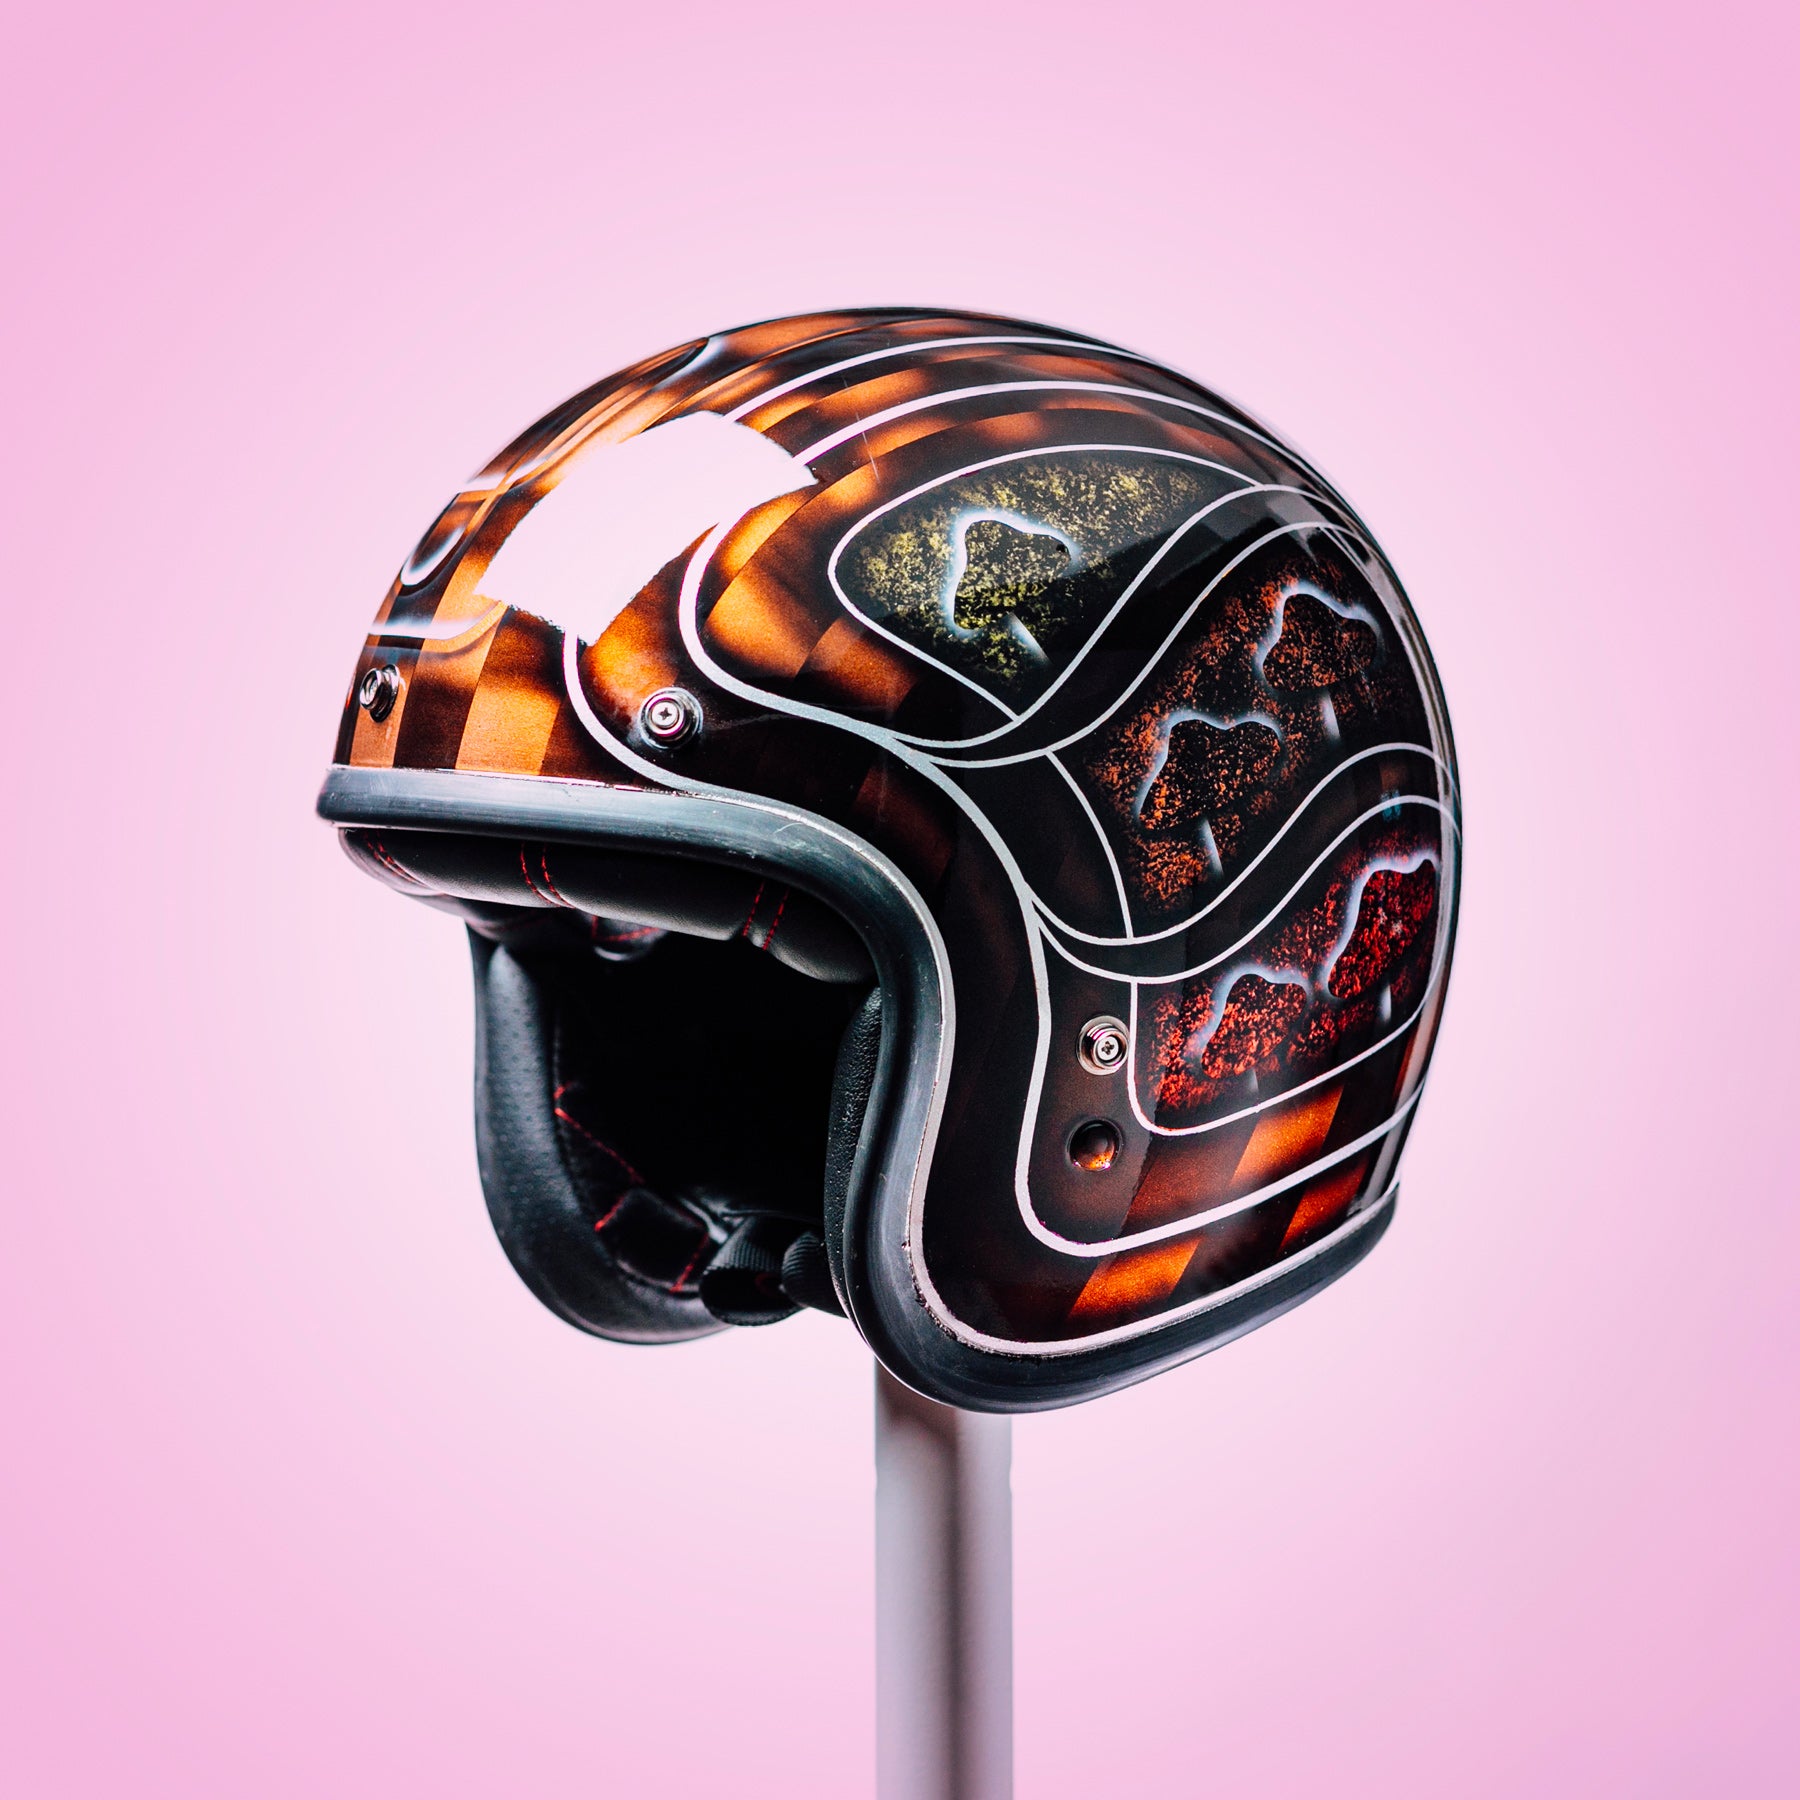 Trippy Ten helmet art show Pittsburgh Glory Daze motorcycle show Kurt Alexa Diserio Bell Helmets Johnny Harris